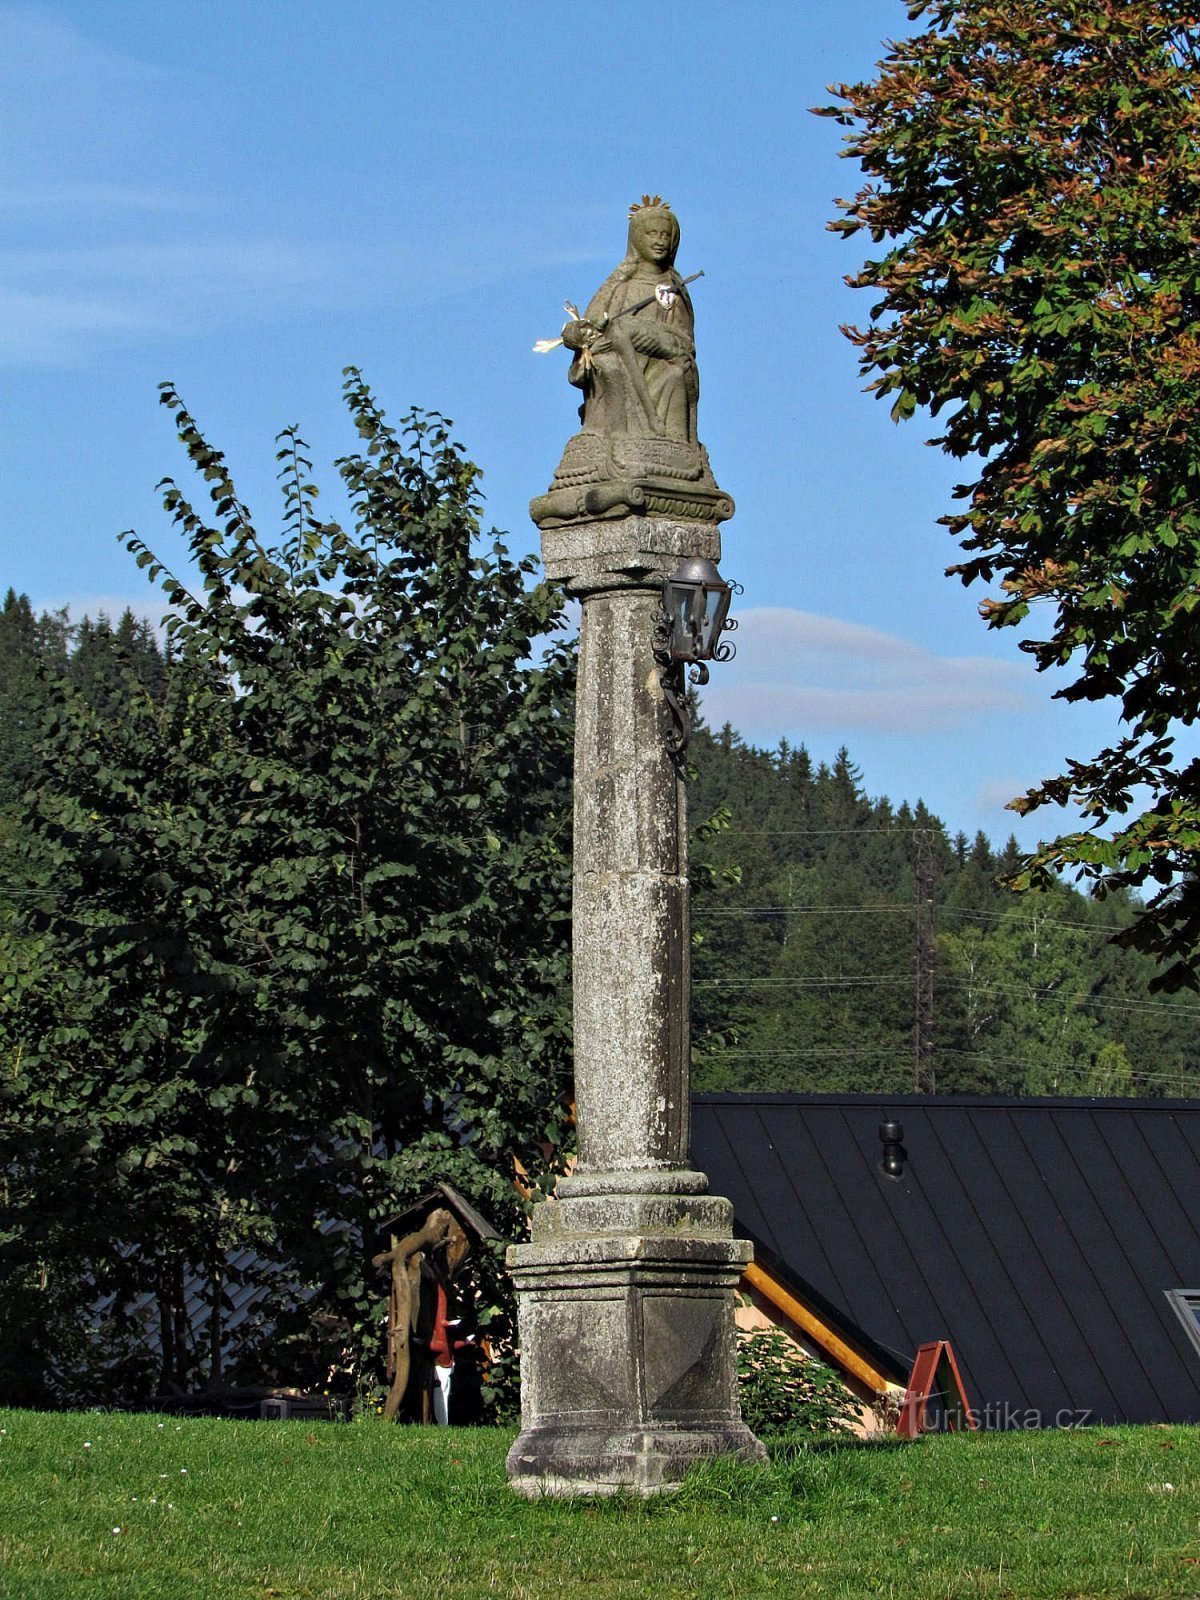 la colonne avec la statue de Pieta